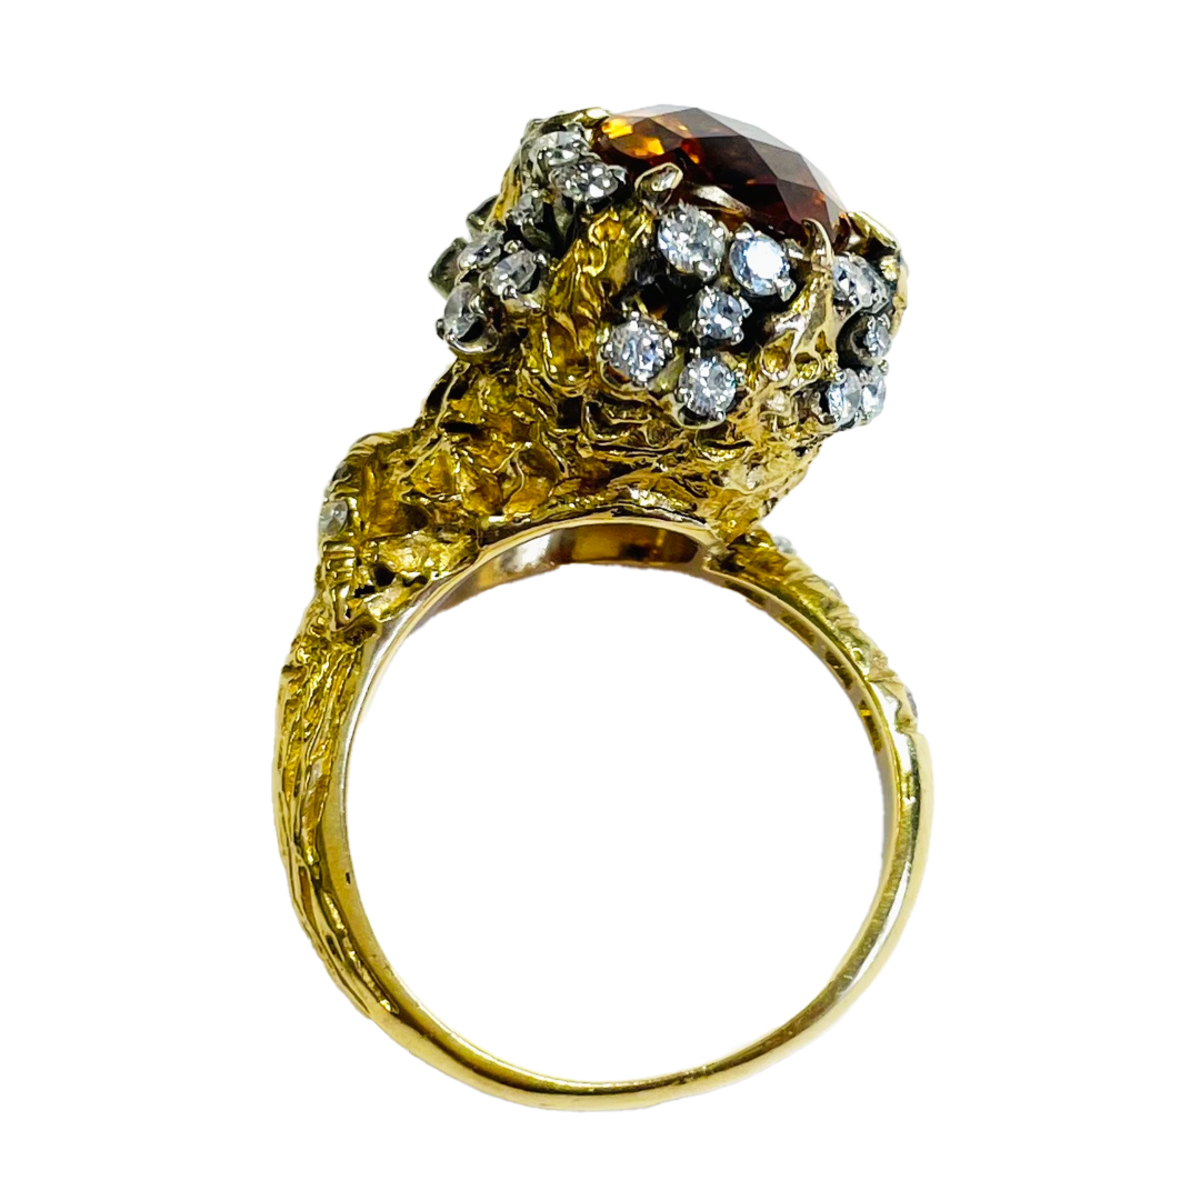 1960s 14KT Yellow Gold Citrine & Diamond Ring profile view